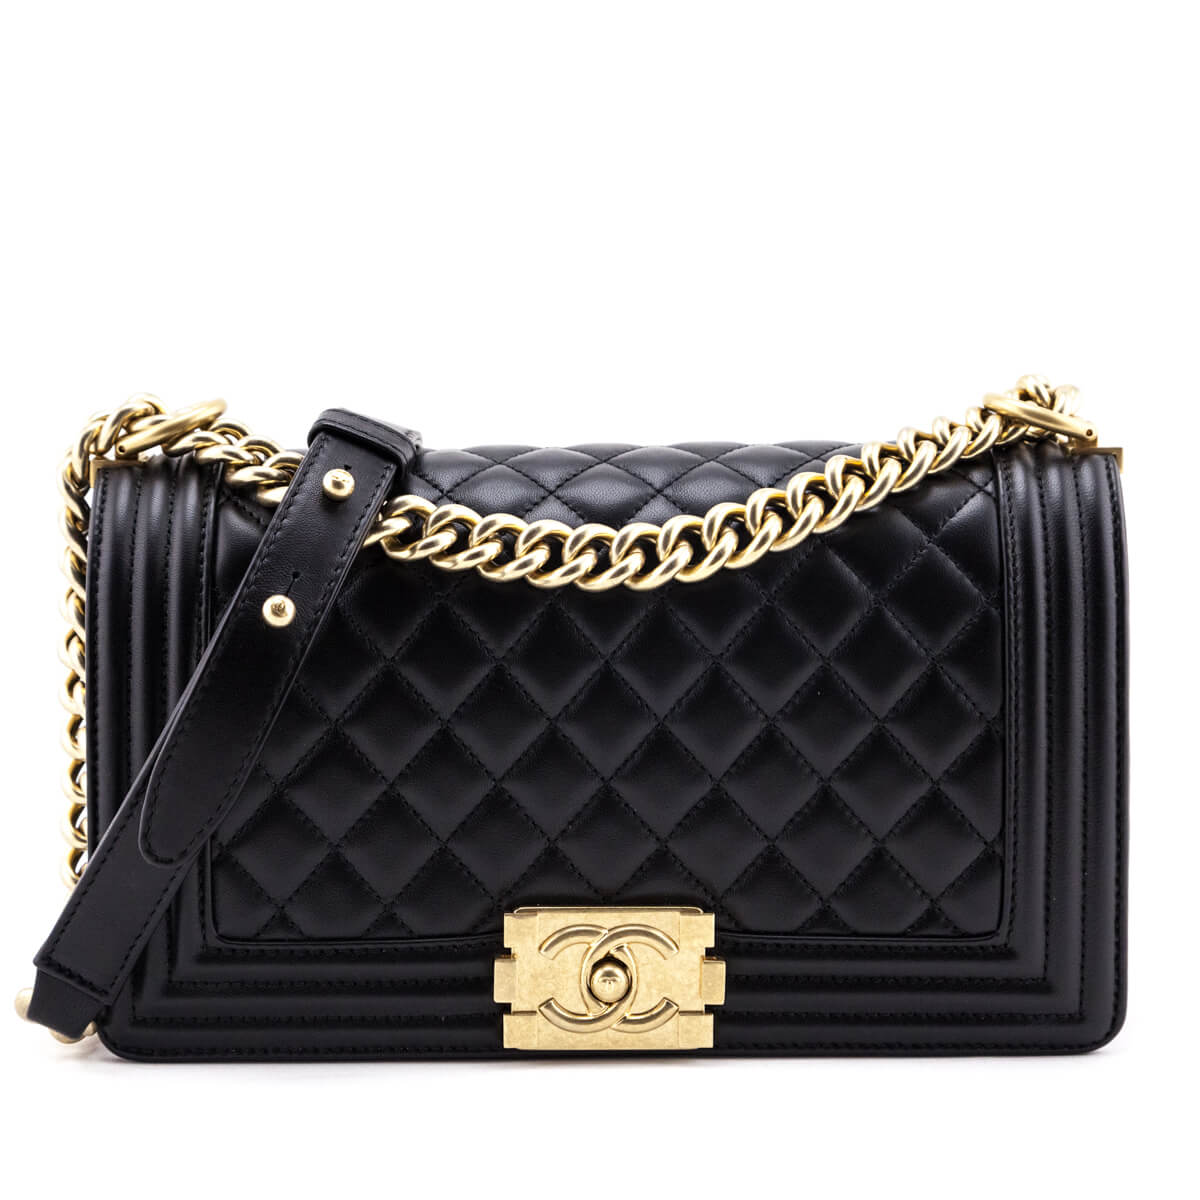 Chanel Black Quilted Lambskin Medium Boy Flap Bag - Shop Chanel